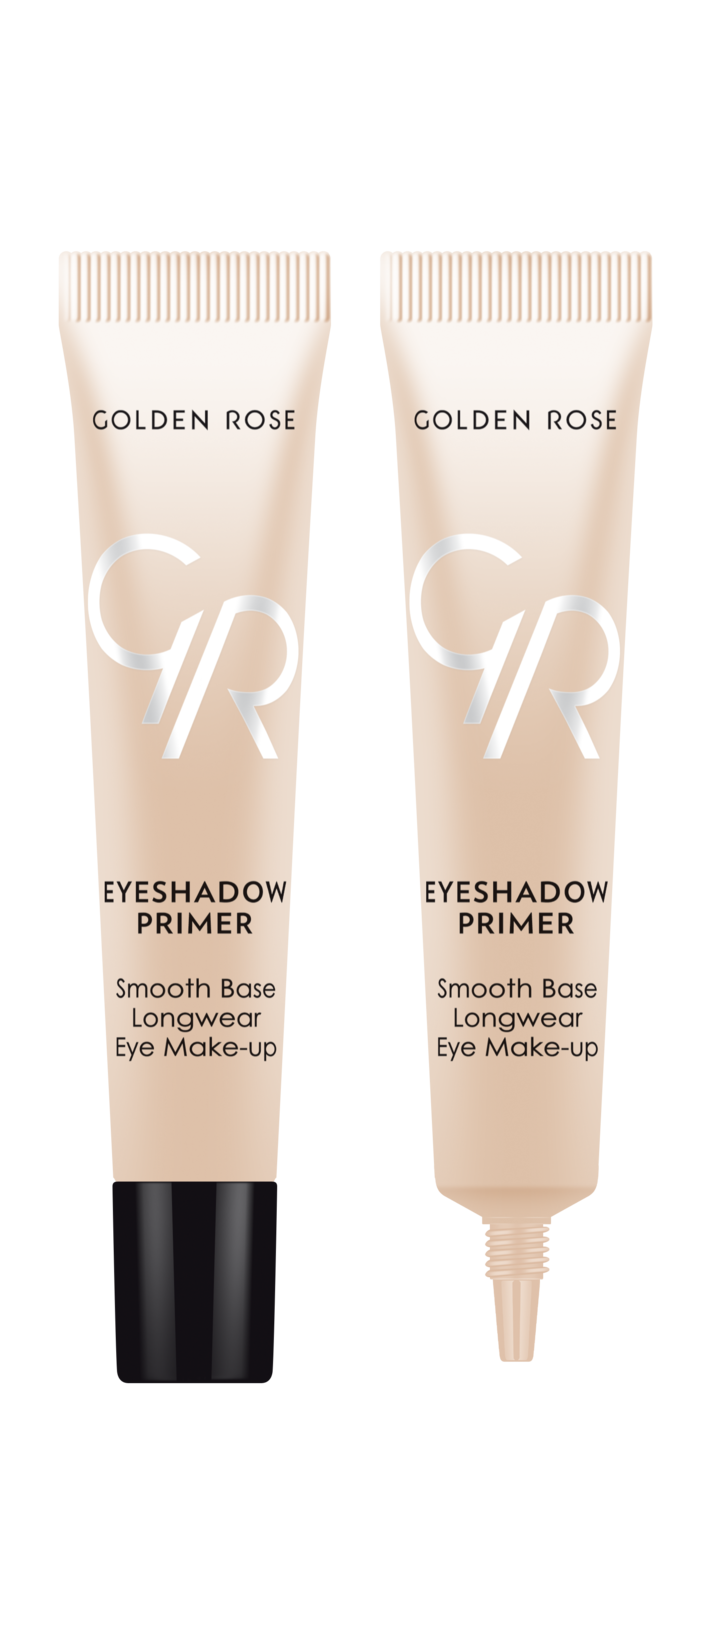 Eyeshadow Primer